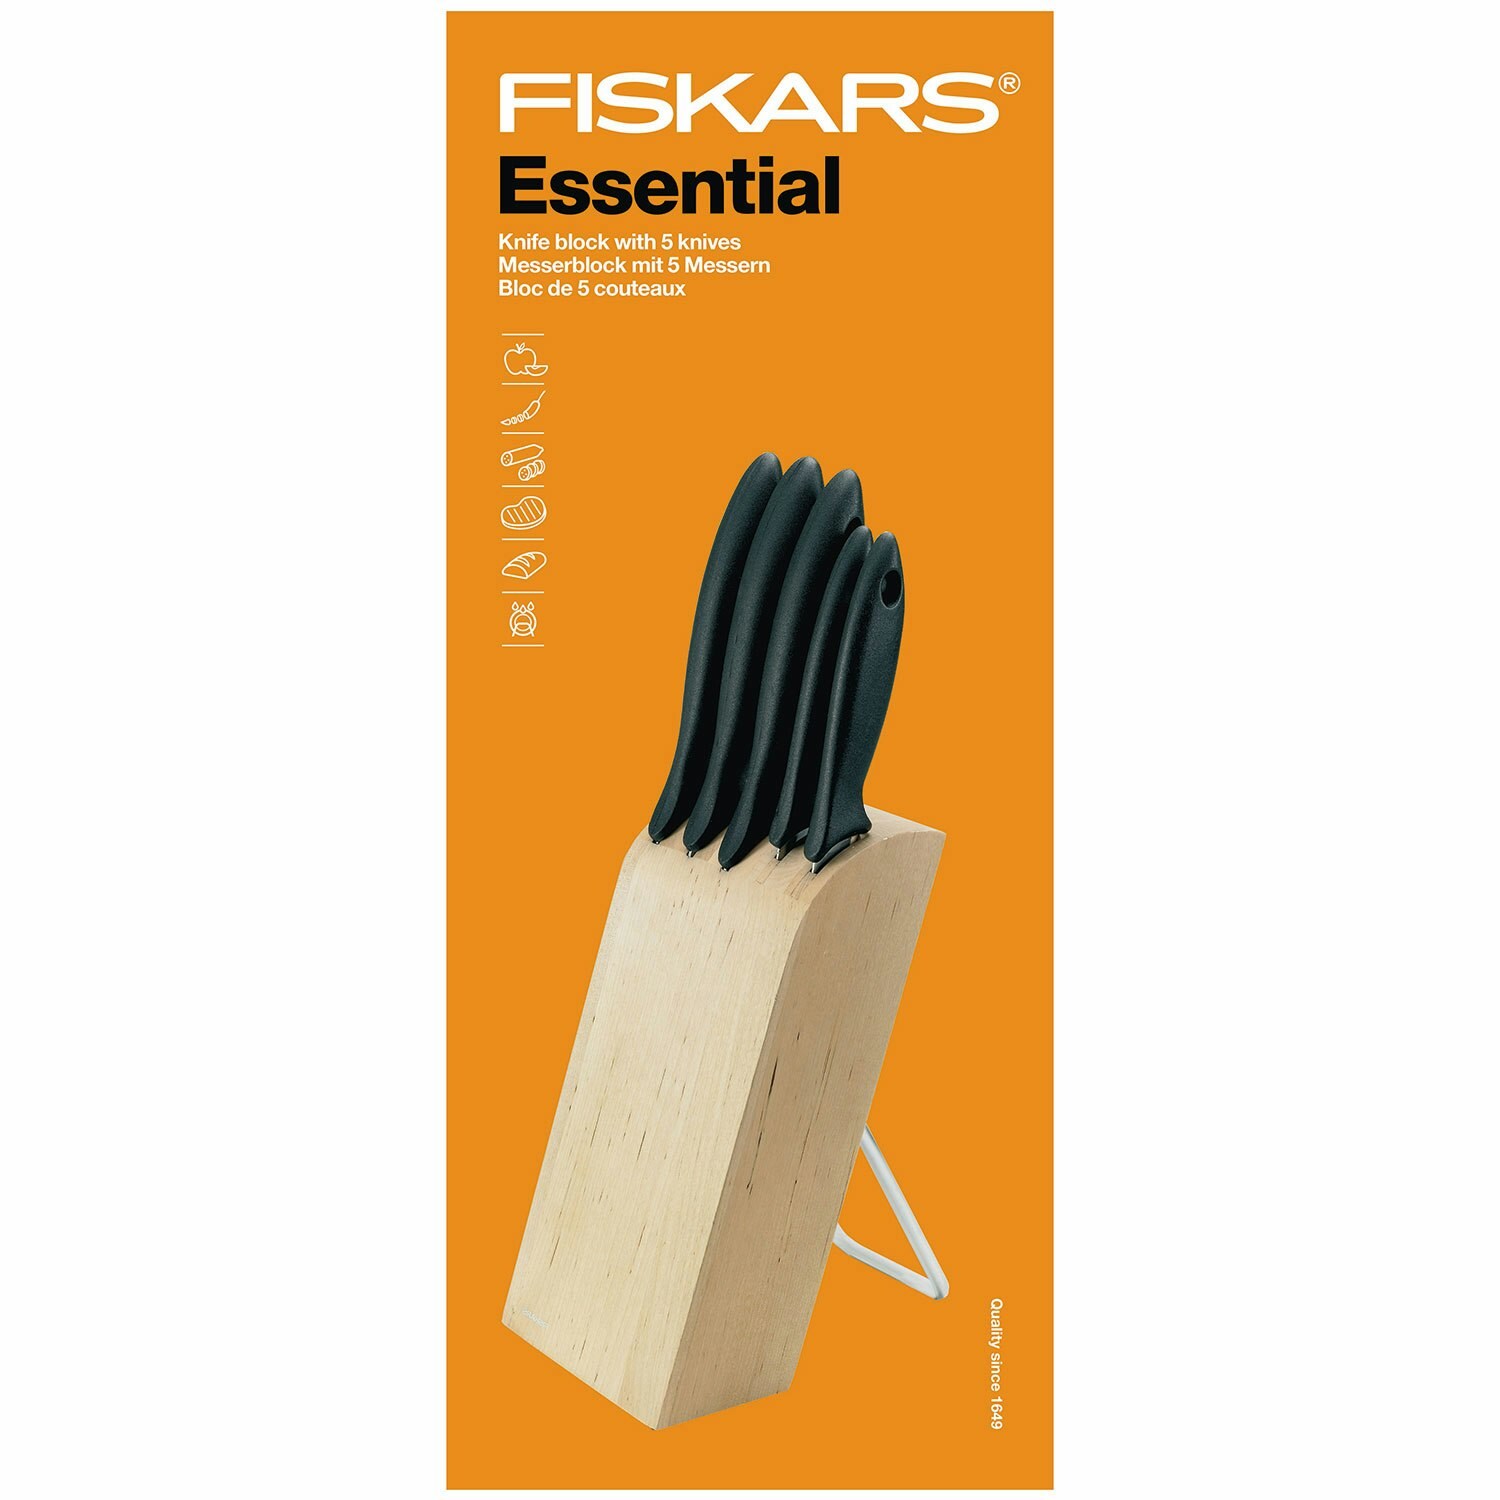 https://royaldesign.com/image/2/fiskars-essential-knife-block-with-5-knives-0